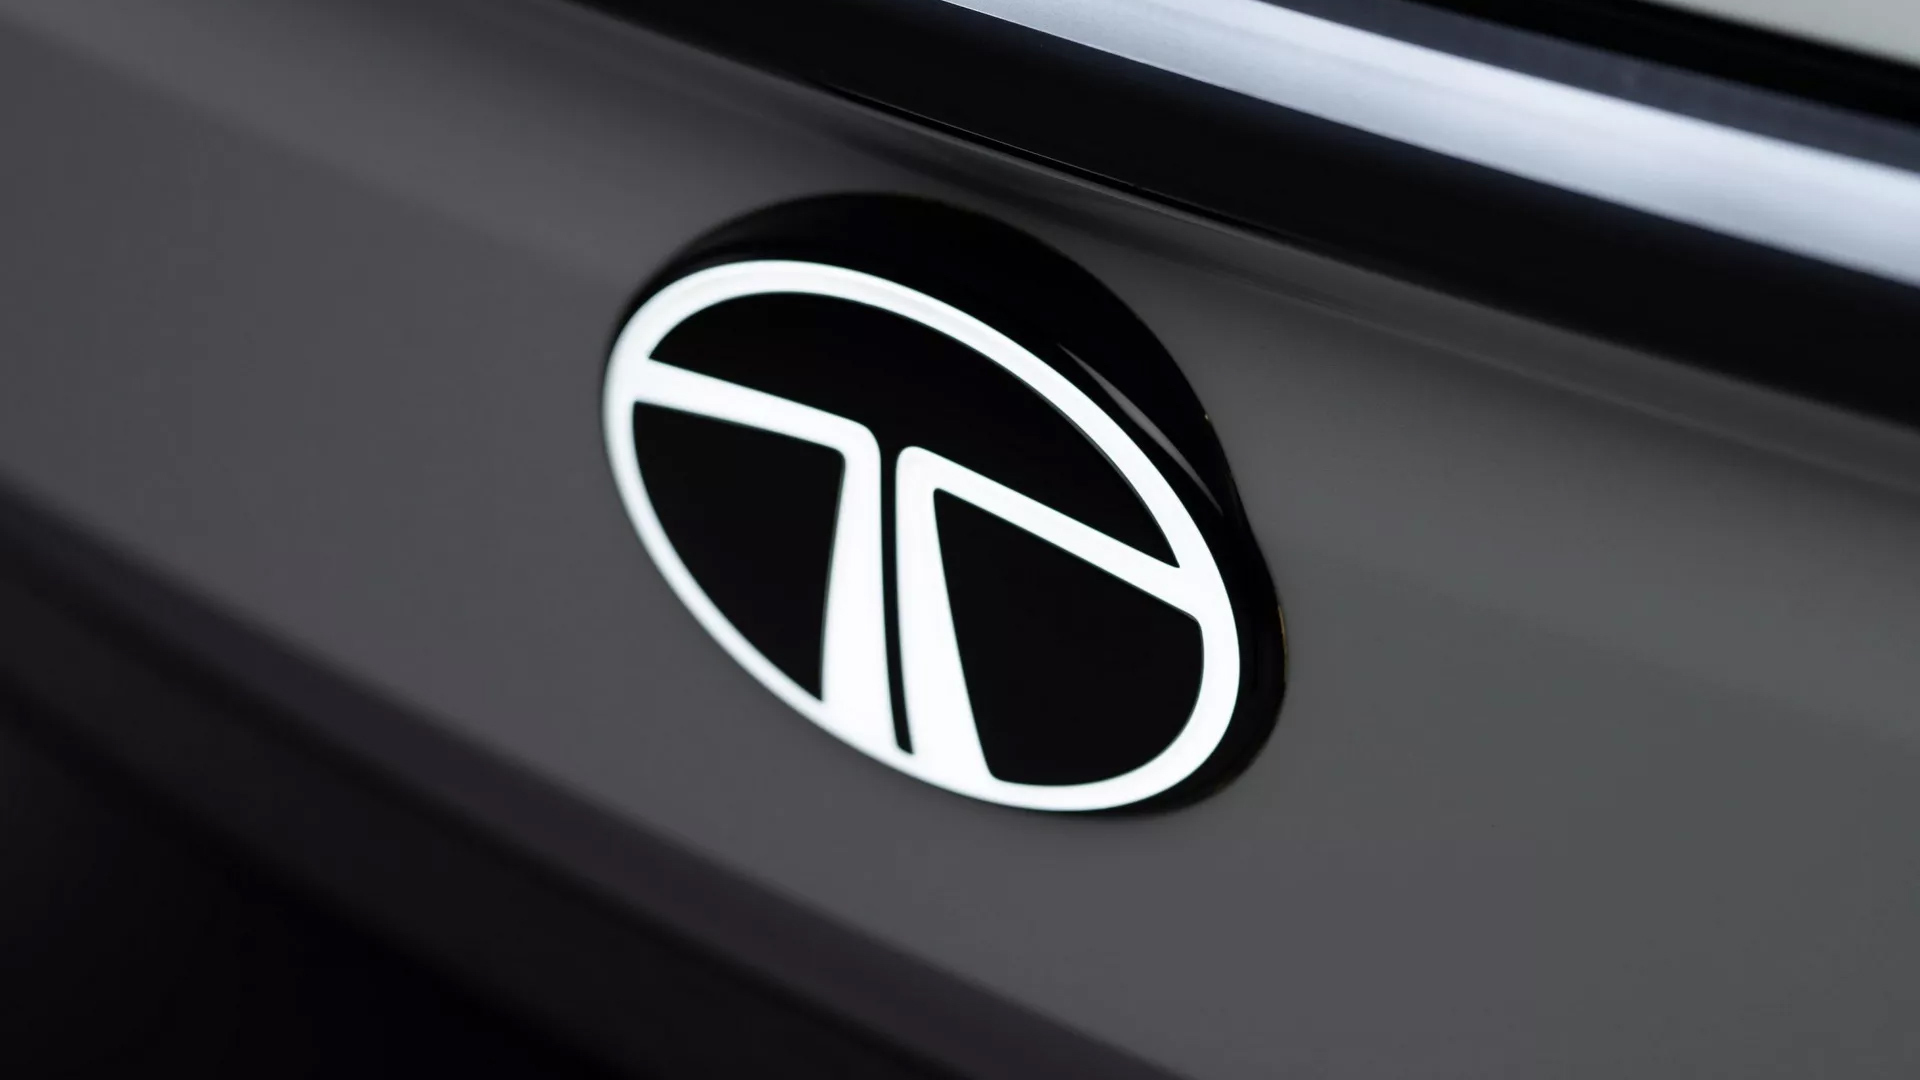 DELHI TRADERSS 3D TATA Chrome Plated Emblem Logo Decal for Car/SUV/Automobiles  : Amazon.in: Car & Motorbike